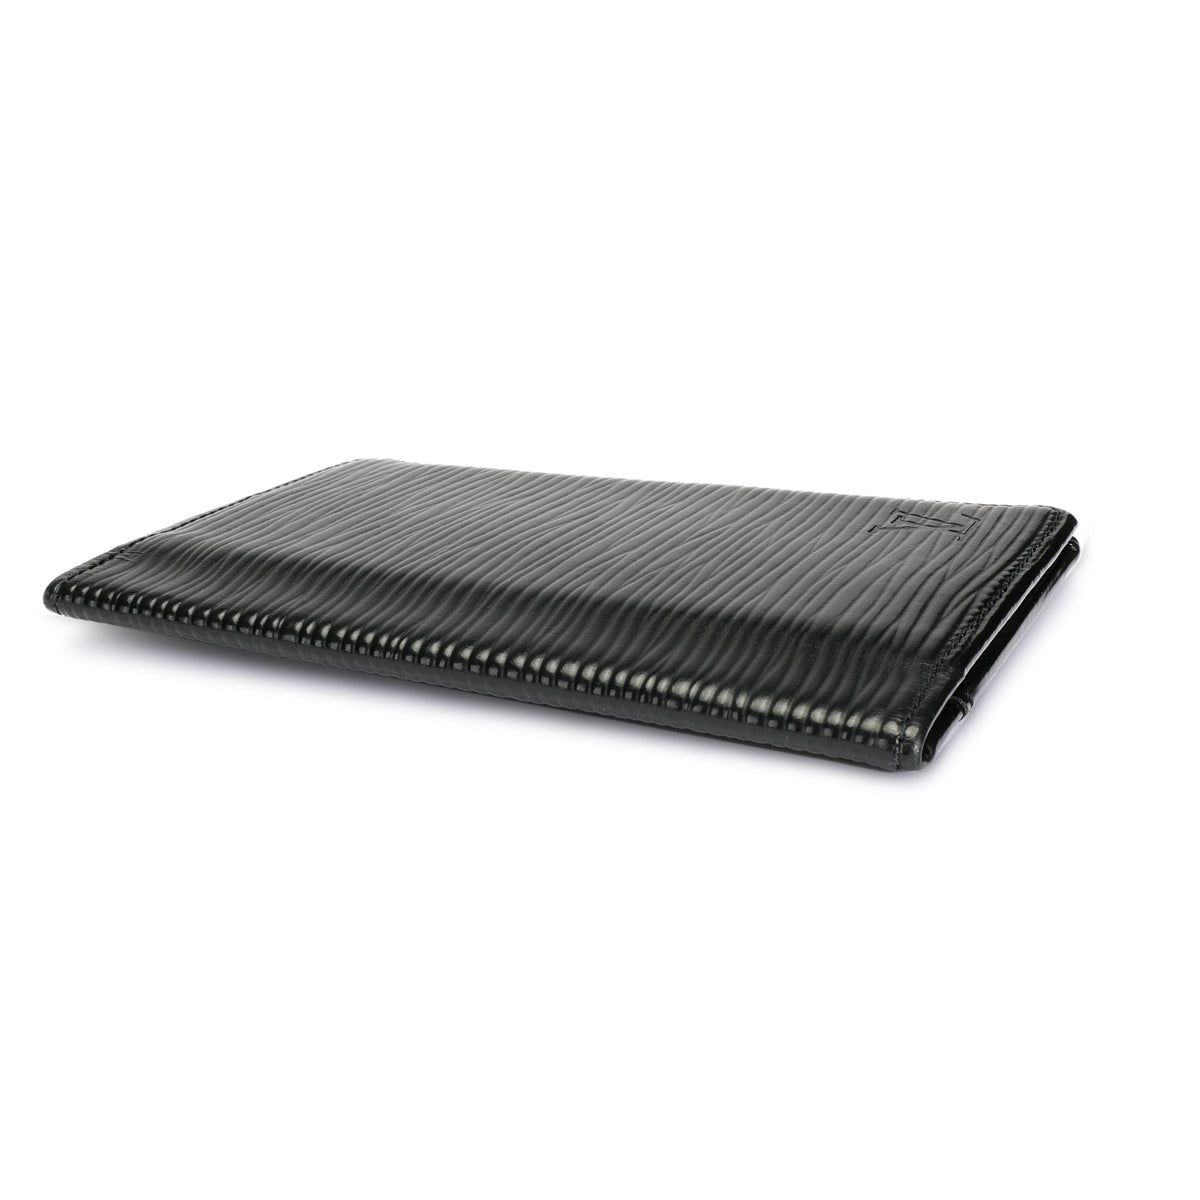 Louis Vuitton Pocket Organizer Epi Leather with Damier Graphite Black  2178774